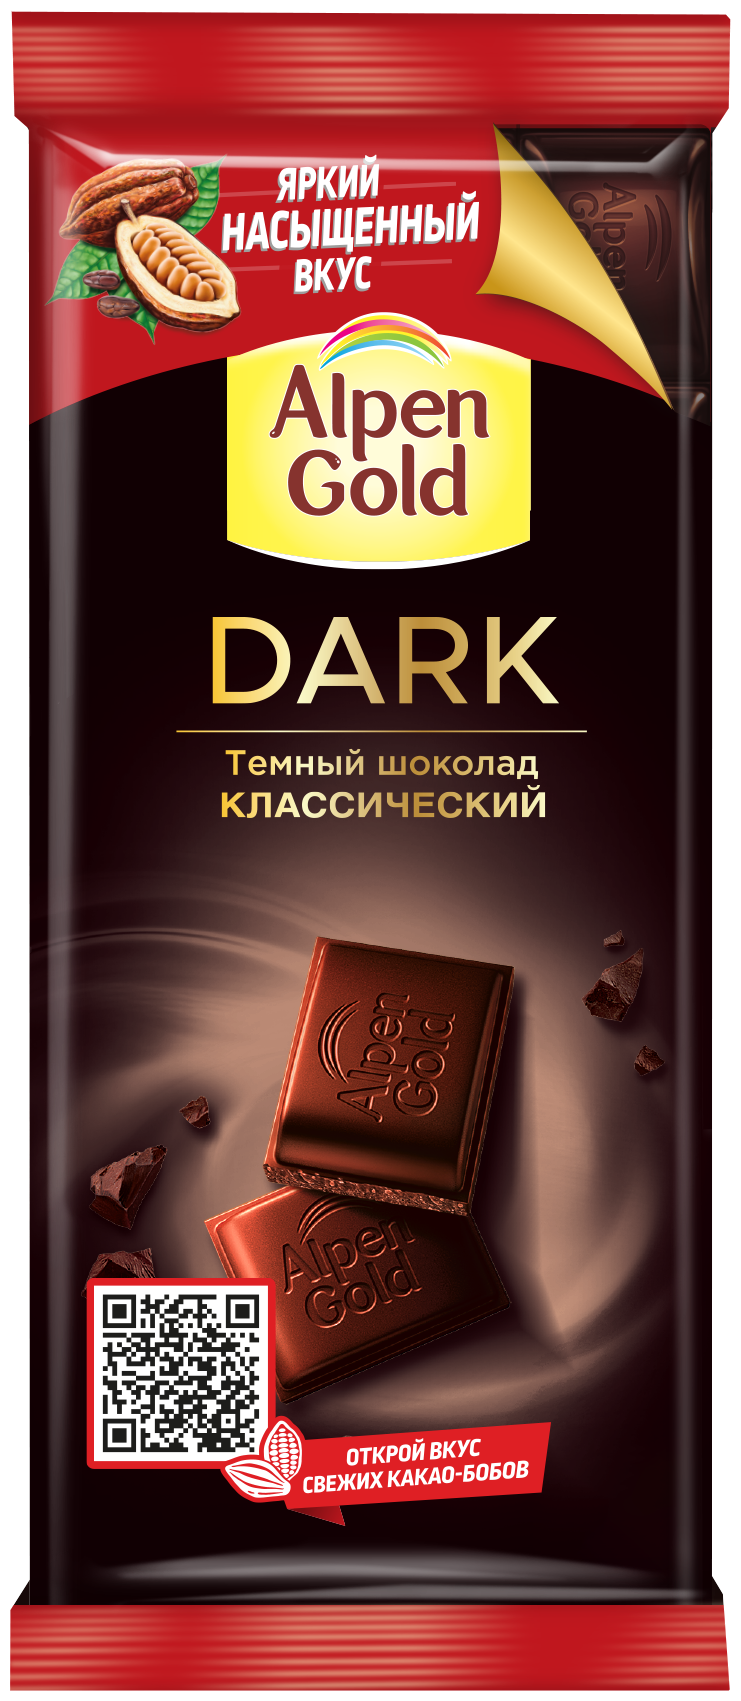 Шоколад Alpen Gold тёмный - фото №2